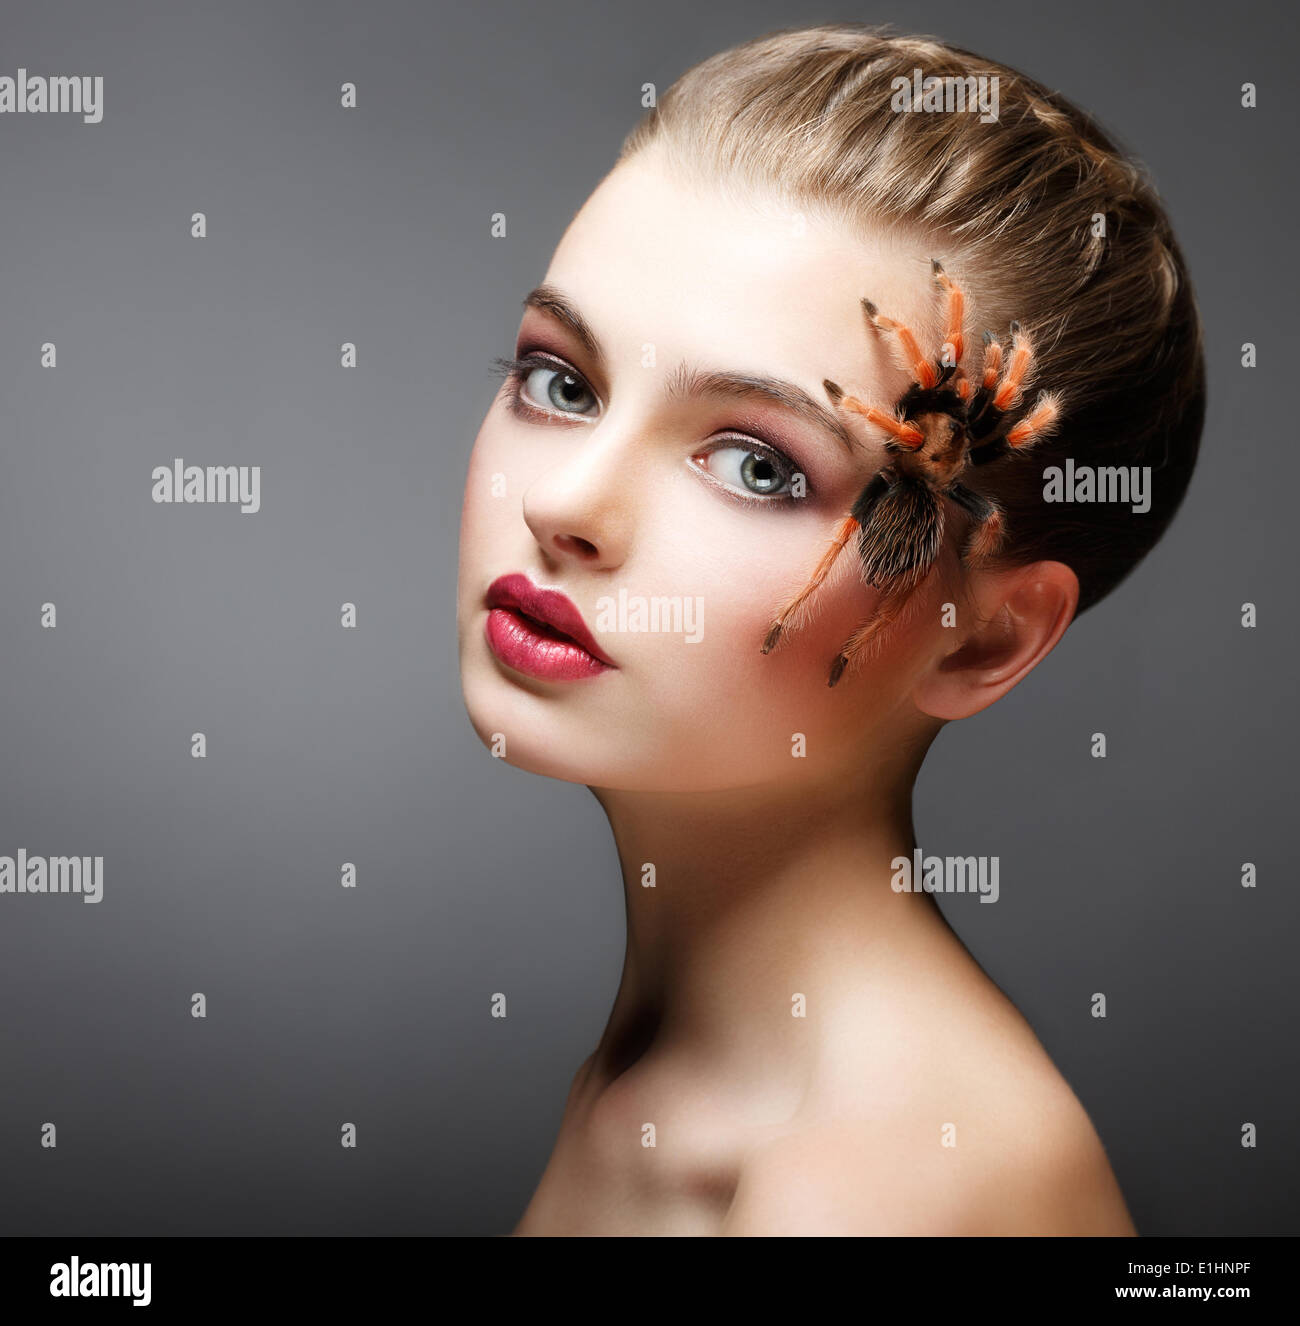 Fantasy. Spider sitting on Pretty Woman Face. Creativity Stock Photo